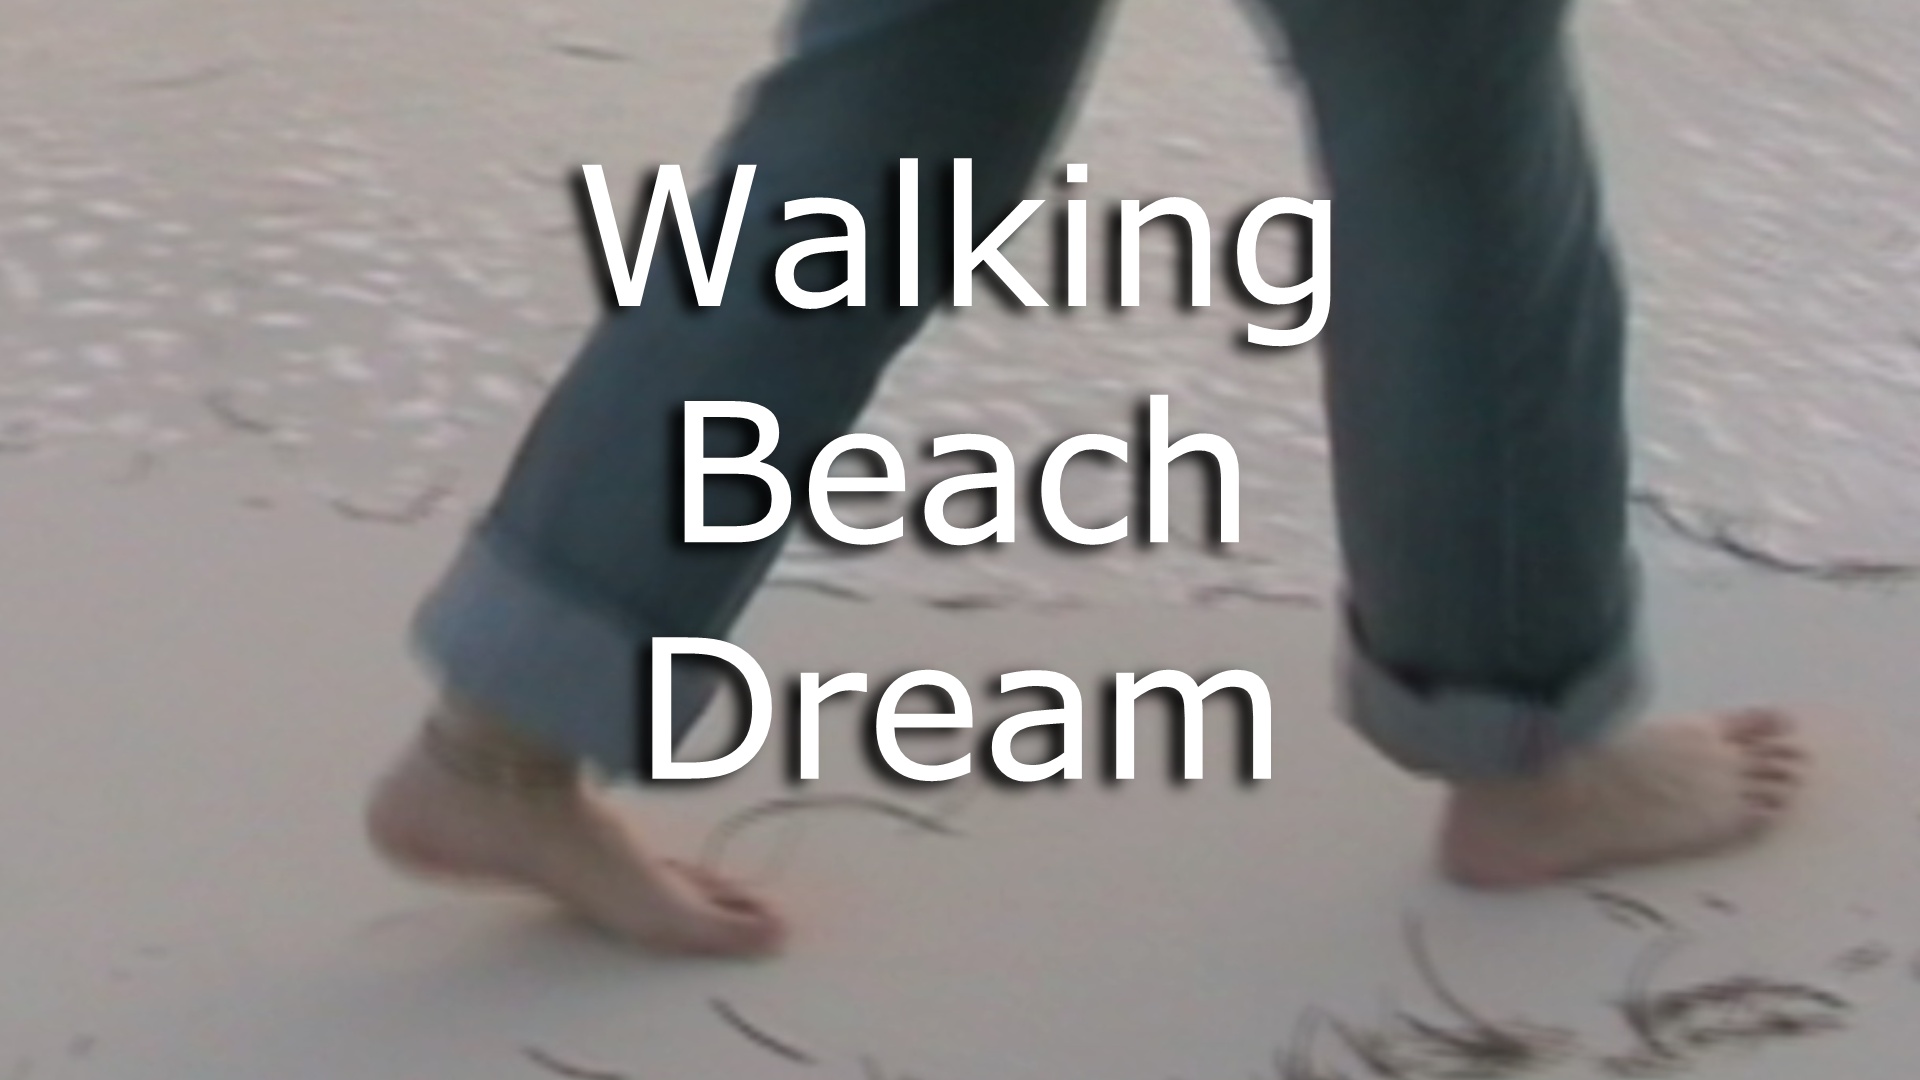 Walking on a Beach Dream Interpretation